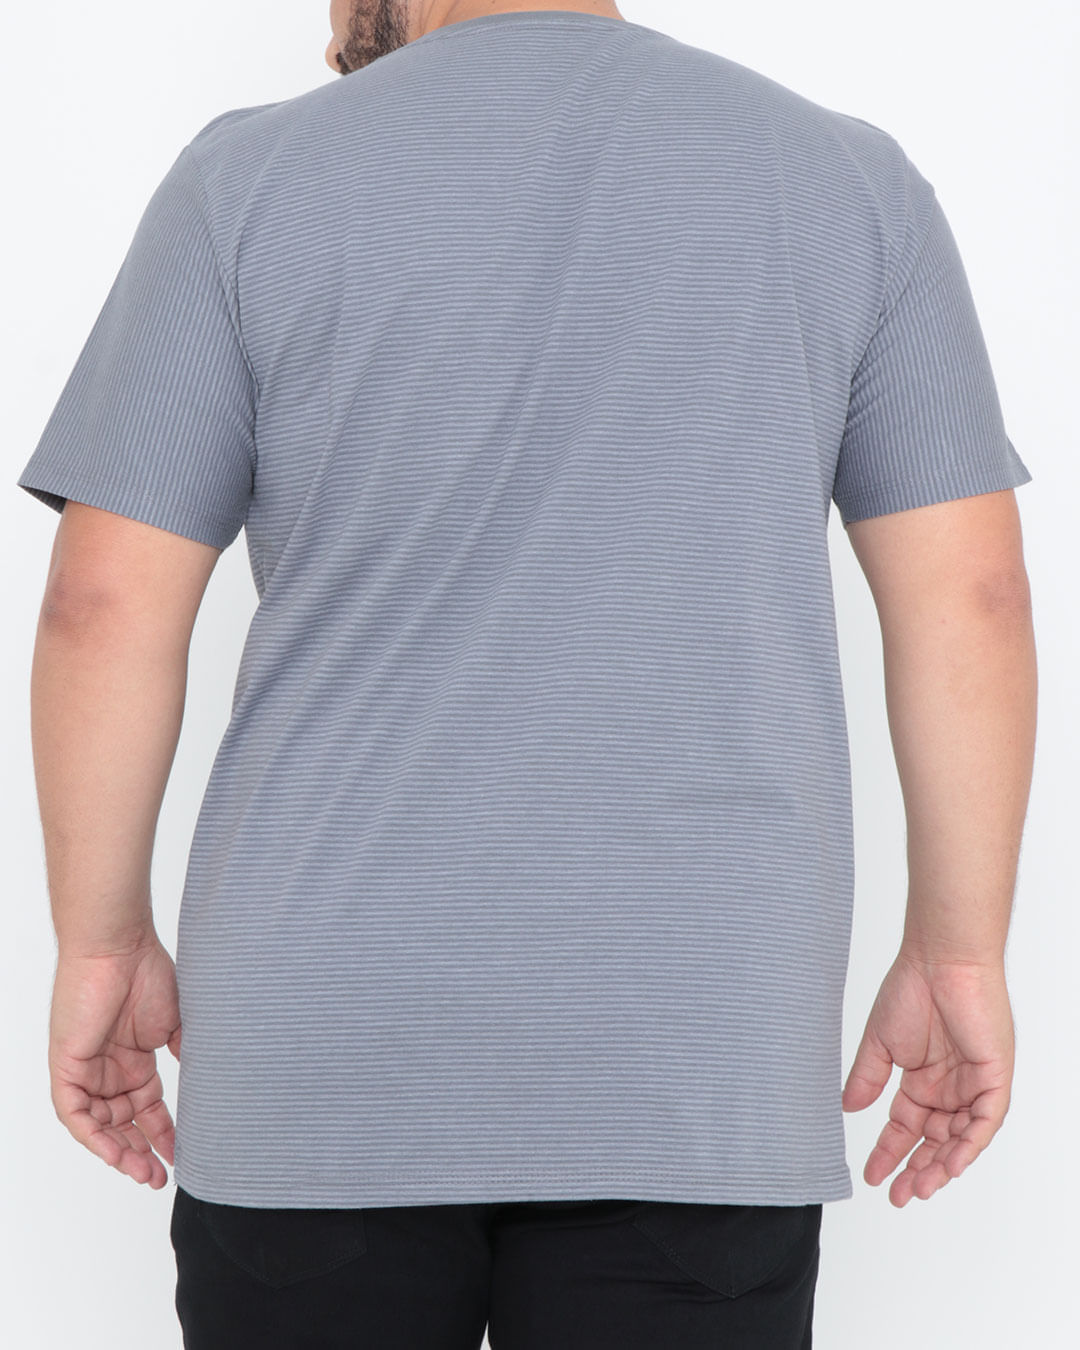 Camiseta-Plus-Size-Estampada-Listras-Mescla-Cinza